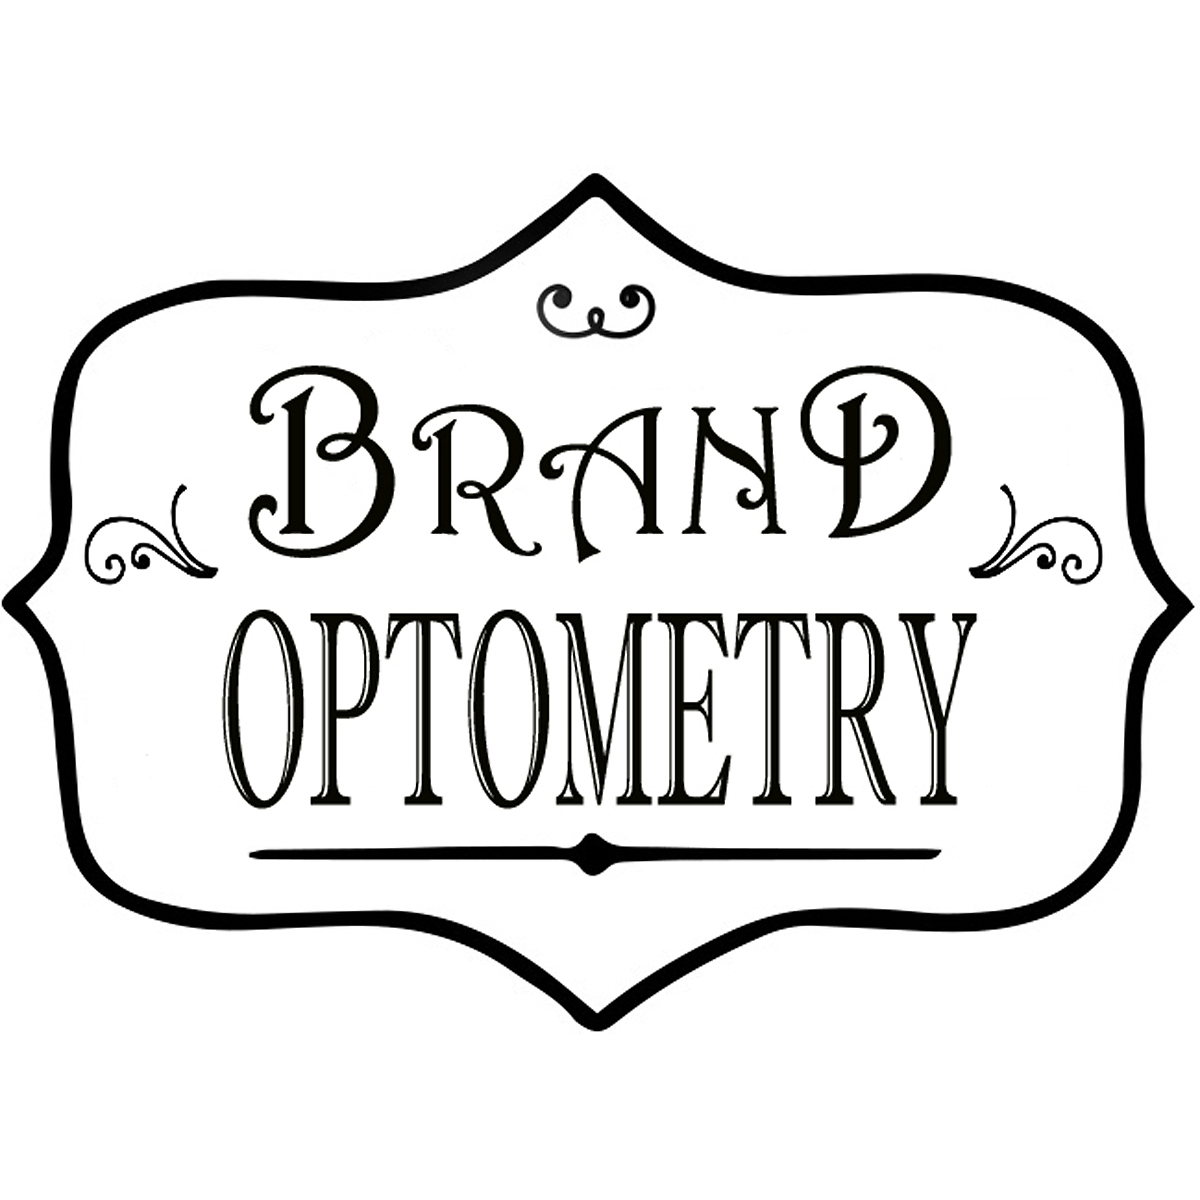 Brand Optometry Logo